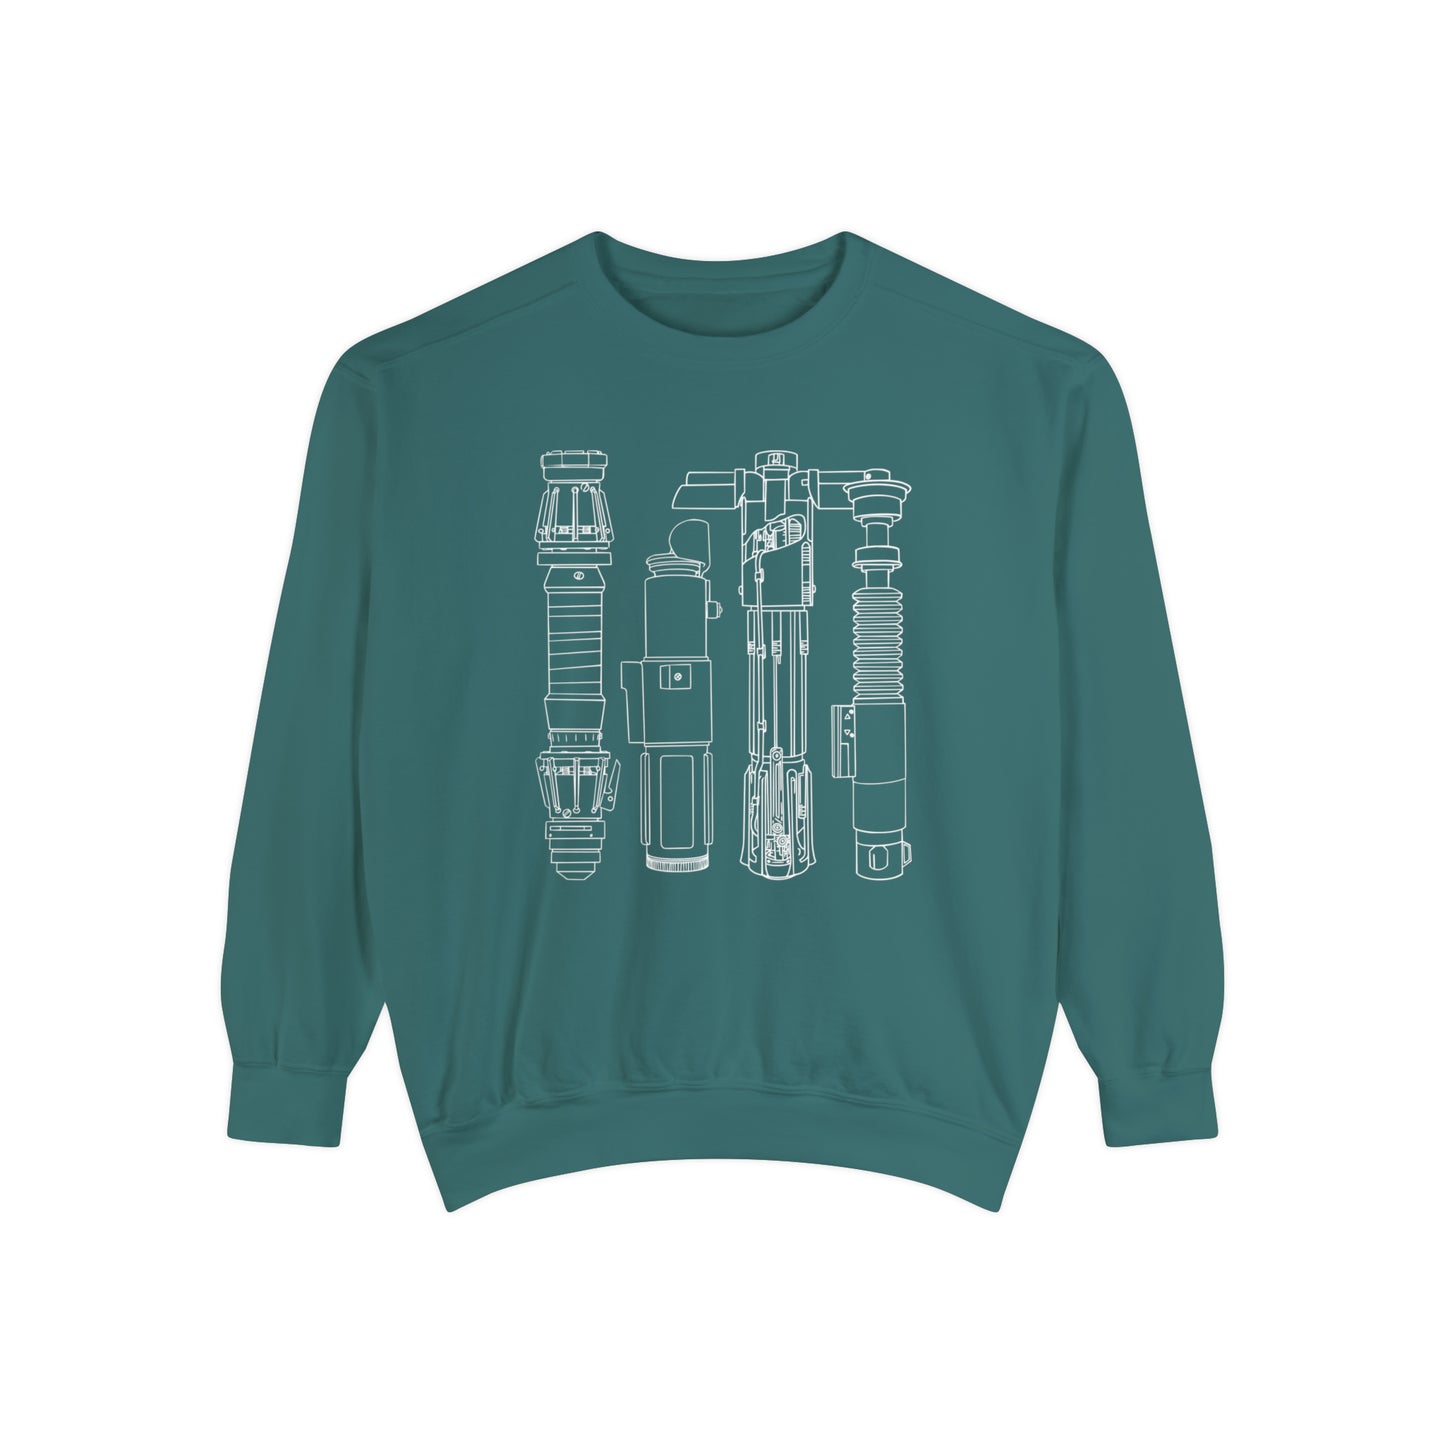 Lightsabers Comfort Colors Unisex Garment-Dyed Sweatshirt